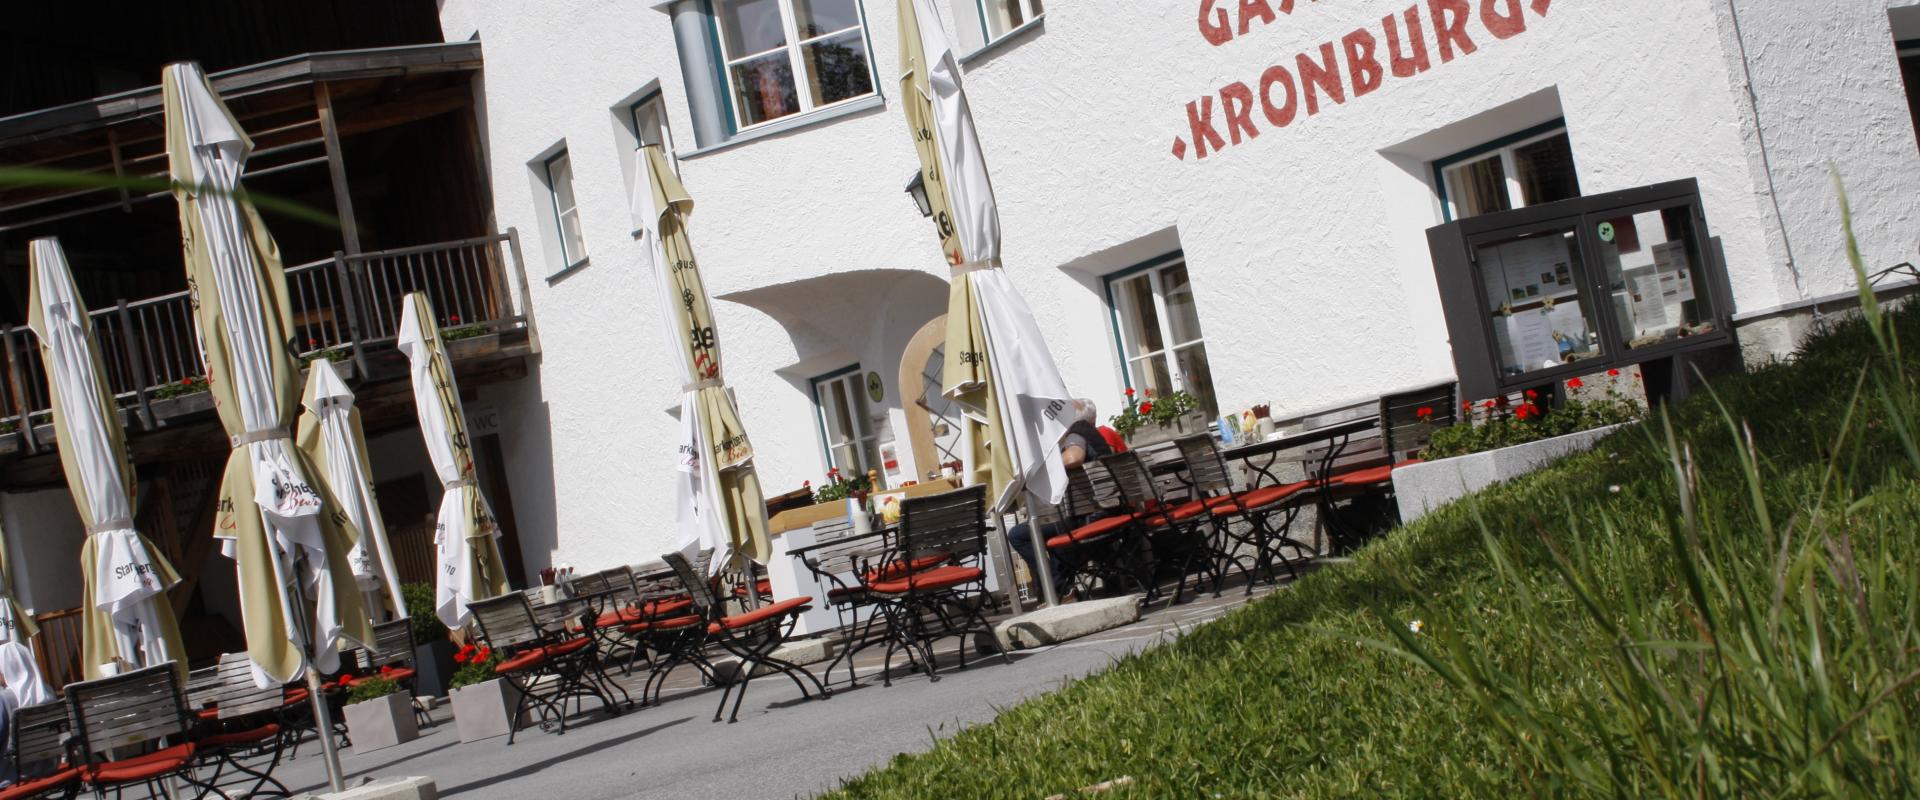 30138 Motorrad Hotel Klösterle Kronburg in Tirol.JPG